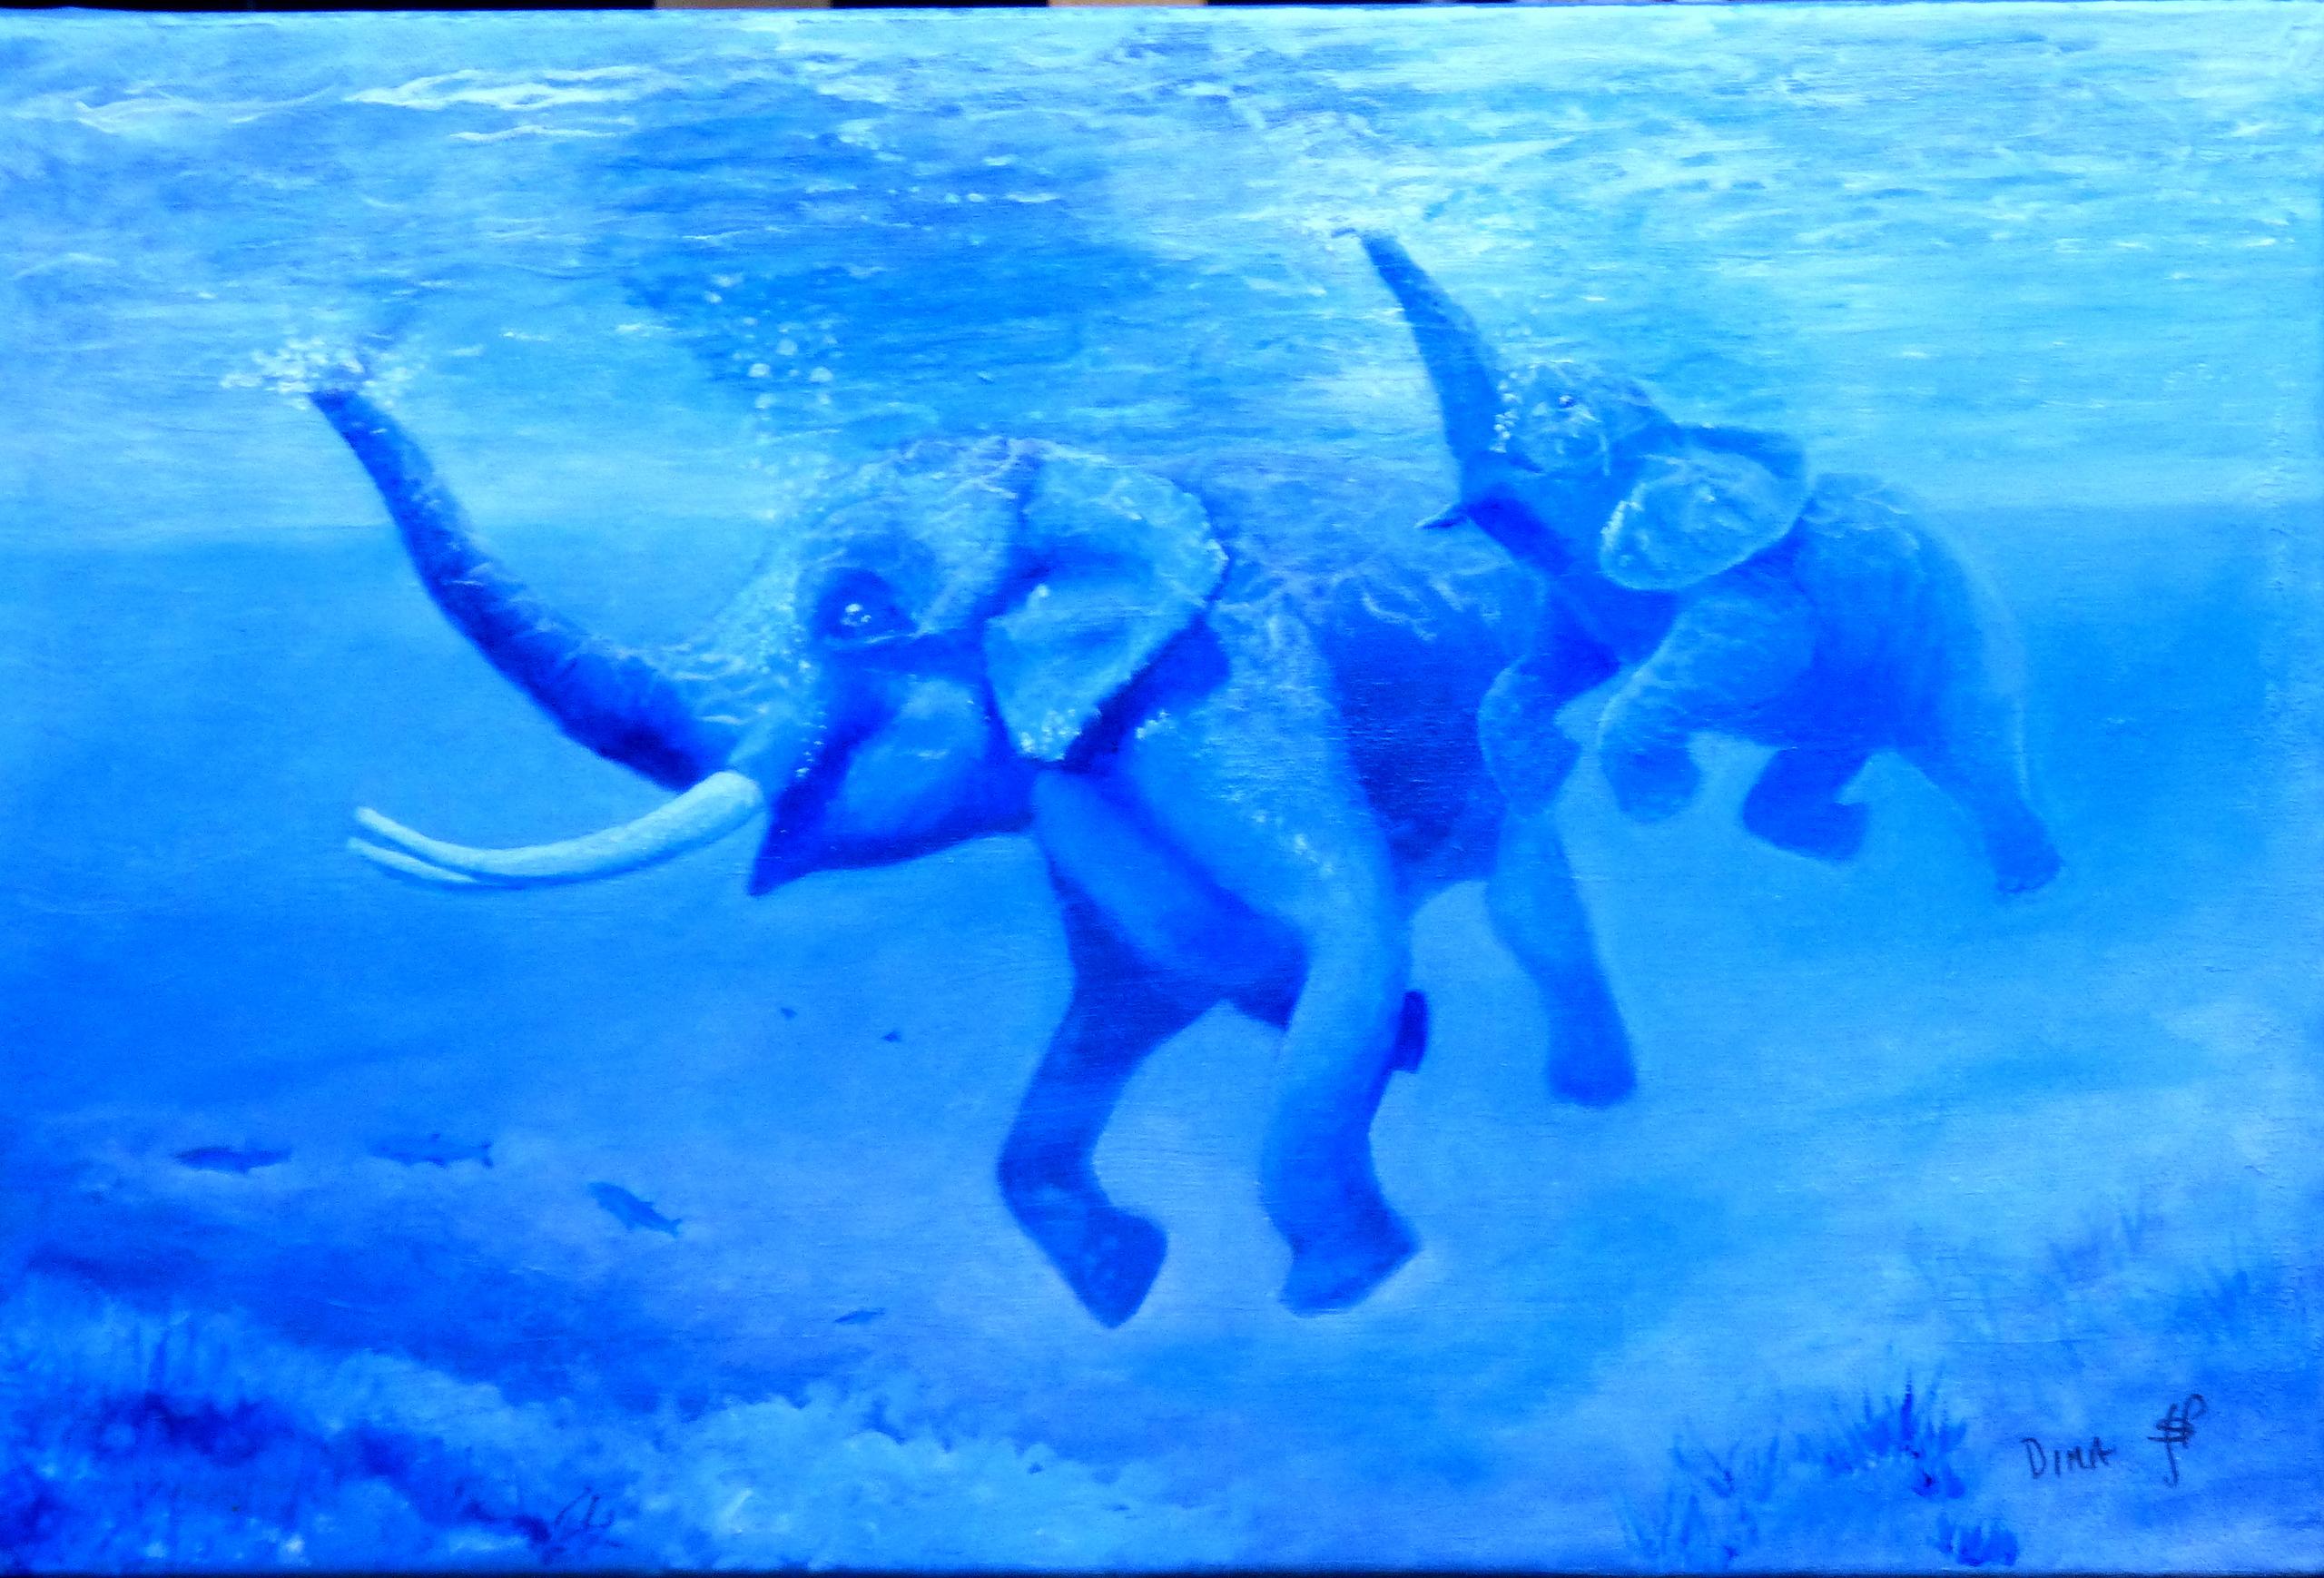 swimming elephants